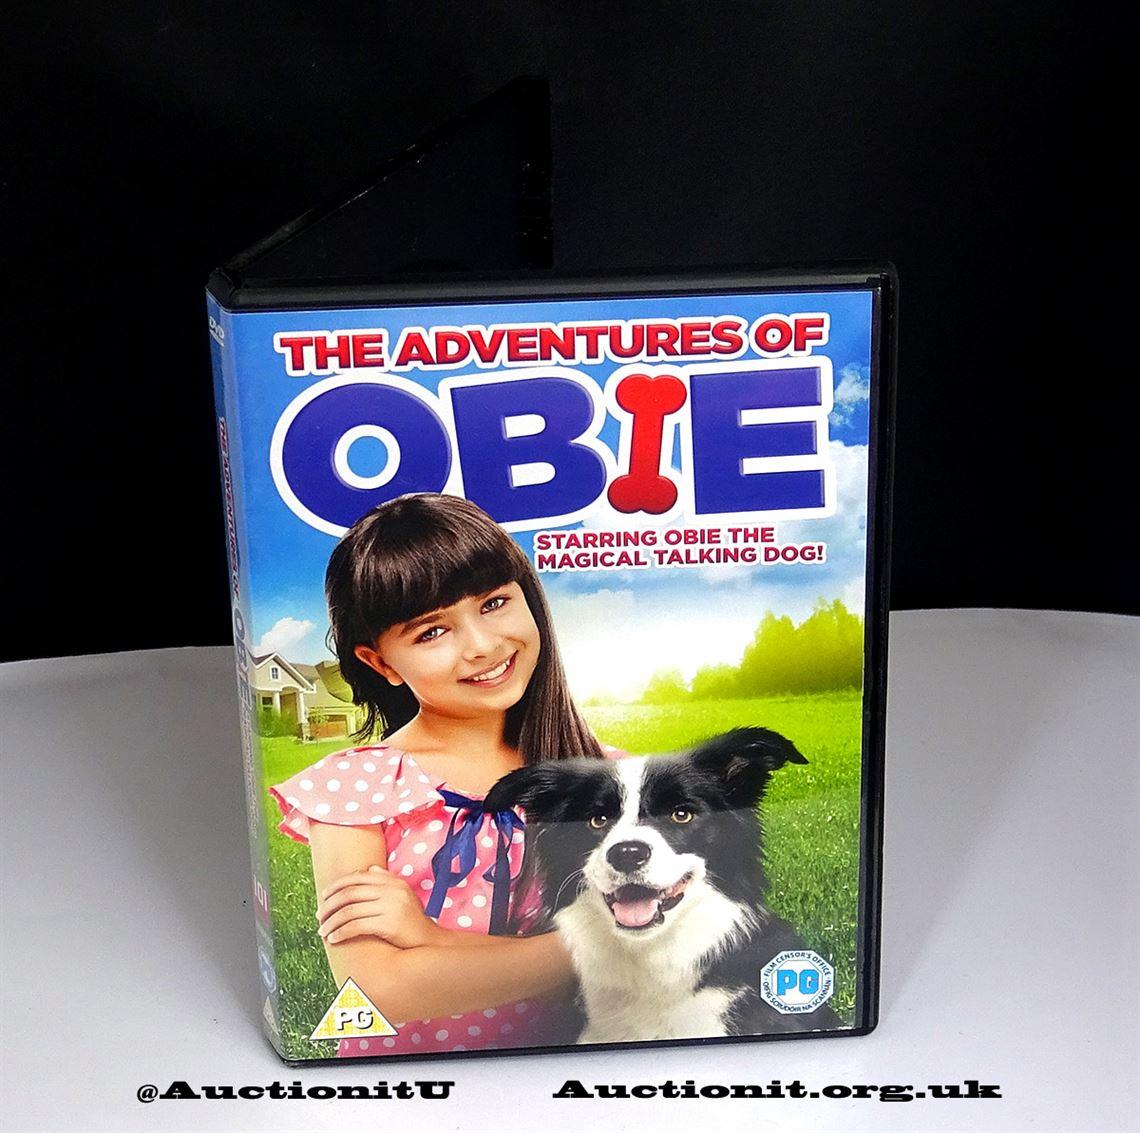 The Adventures of Obie (DVD) - Region 2 - Free International Shipping